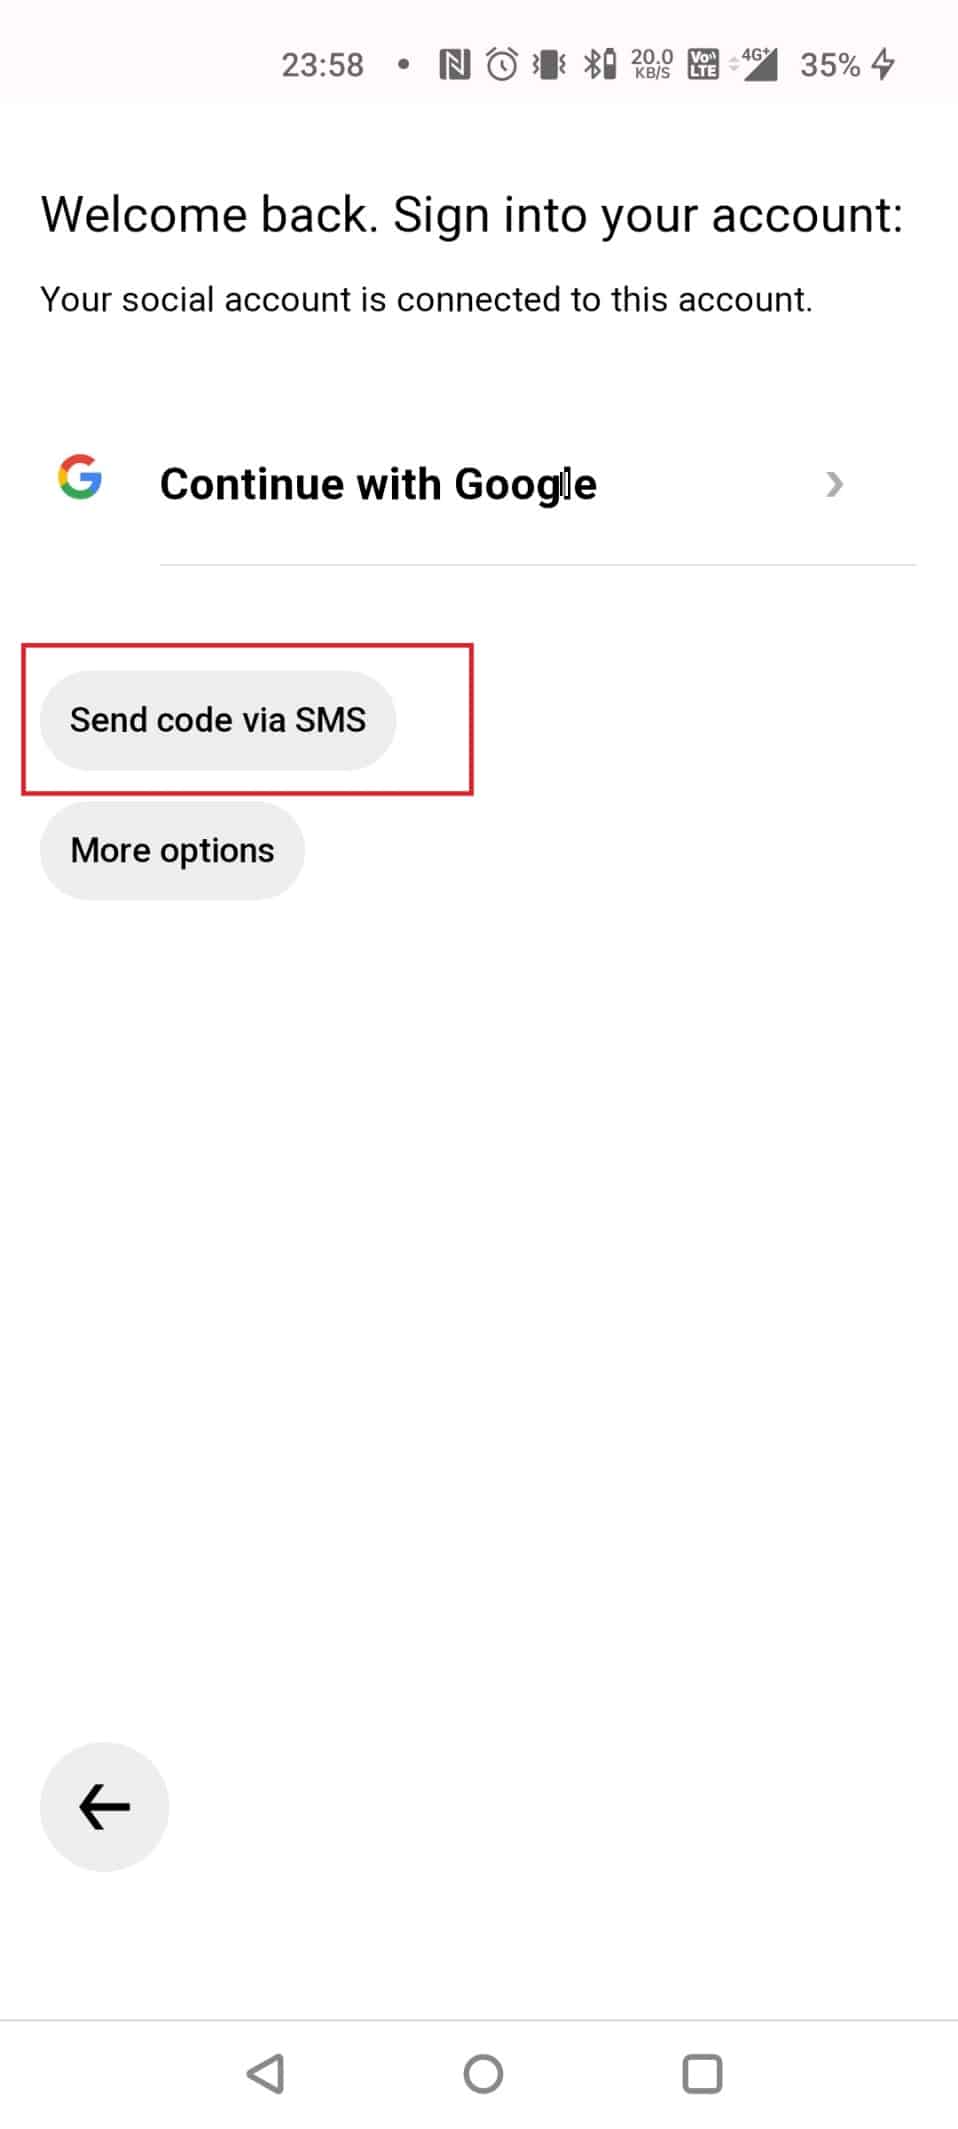 Choose Send code via SMS